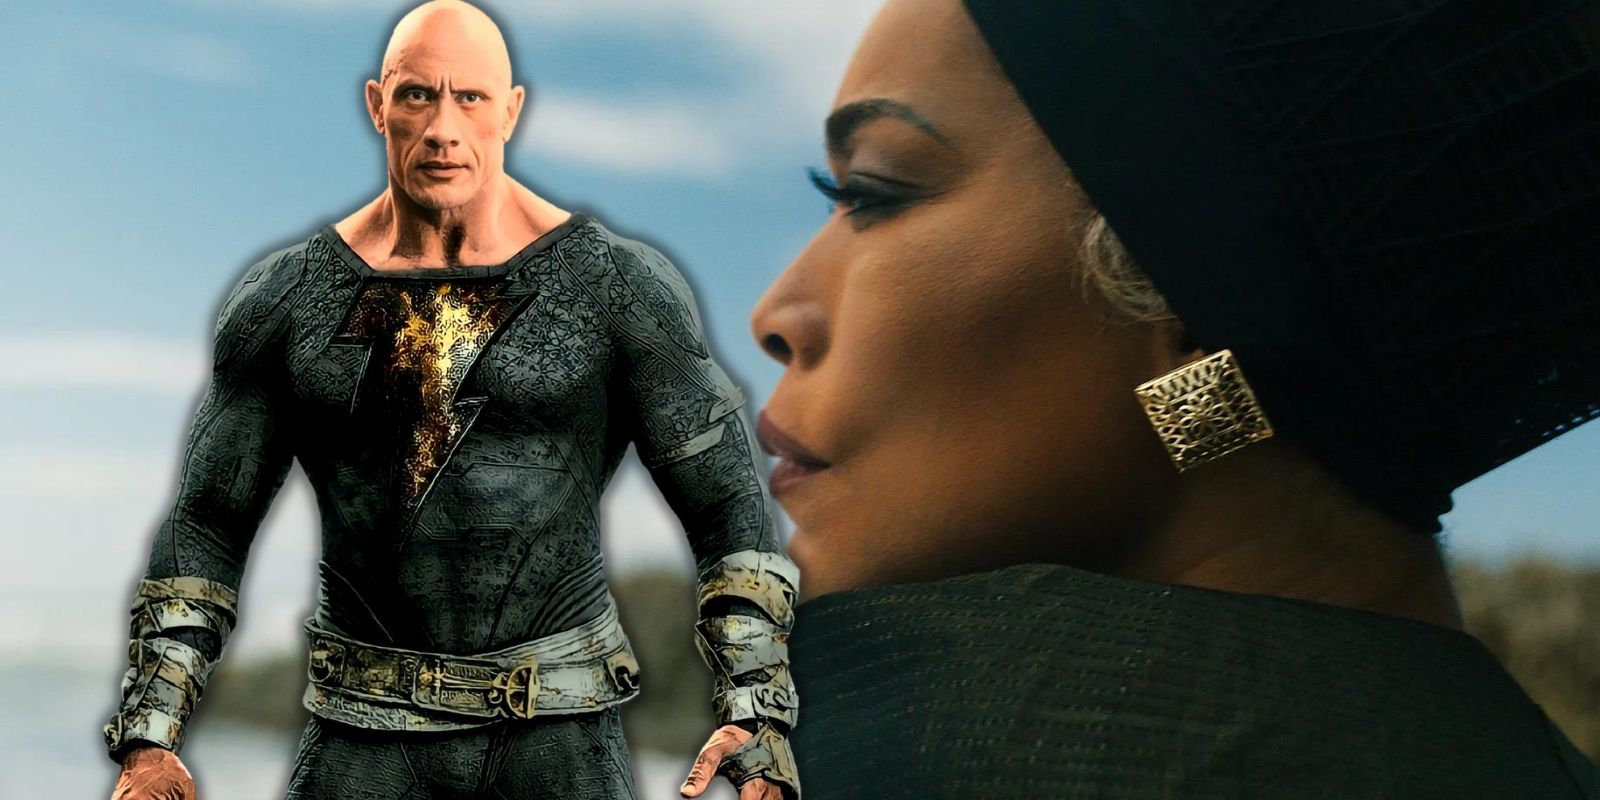 Black Adam Star Dwayne Johnson On Black Panther 2's Box Office Success